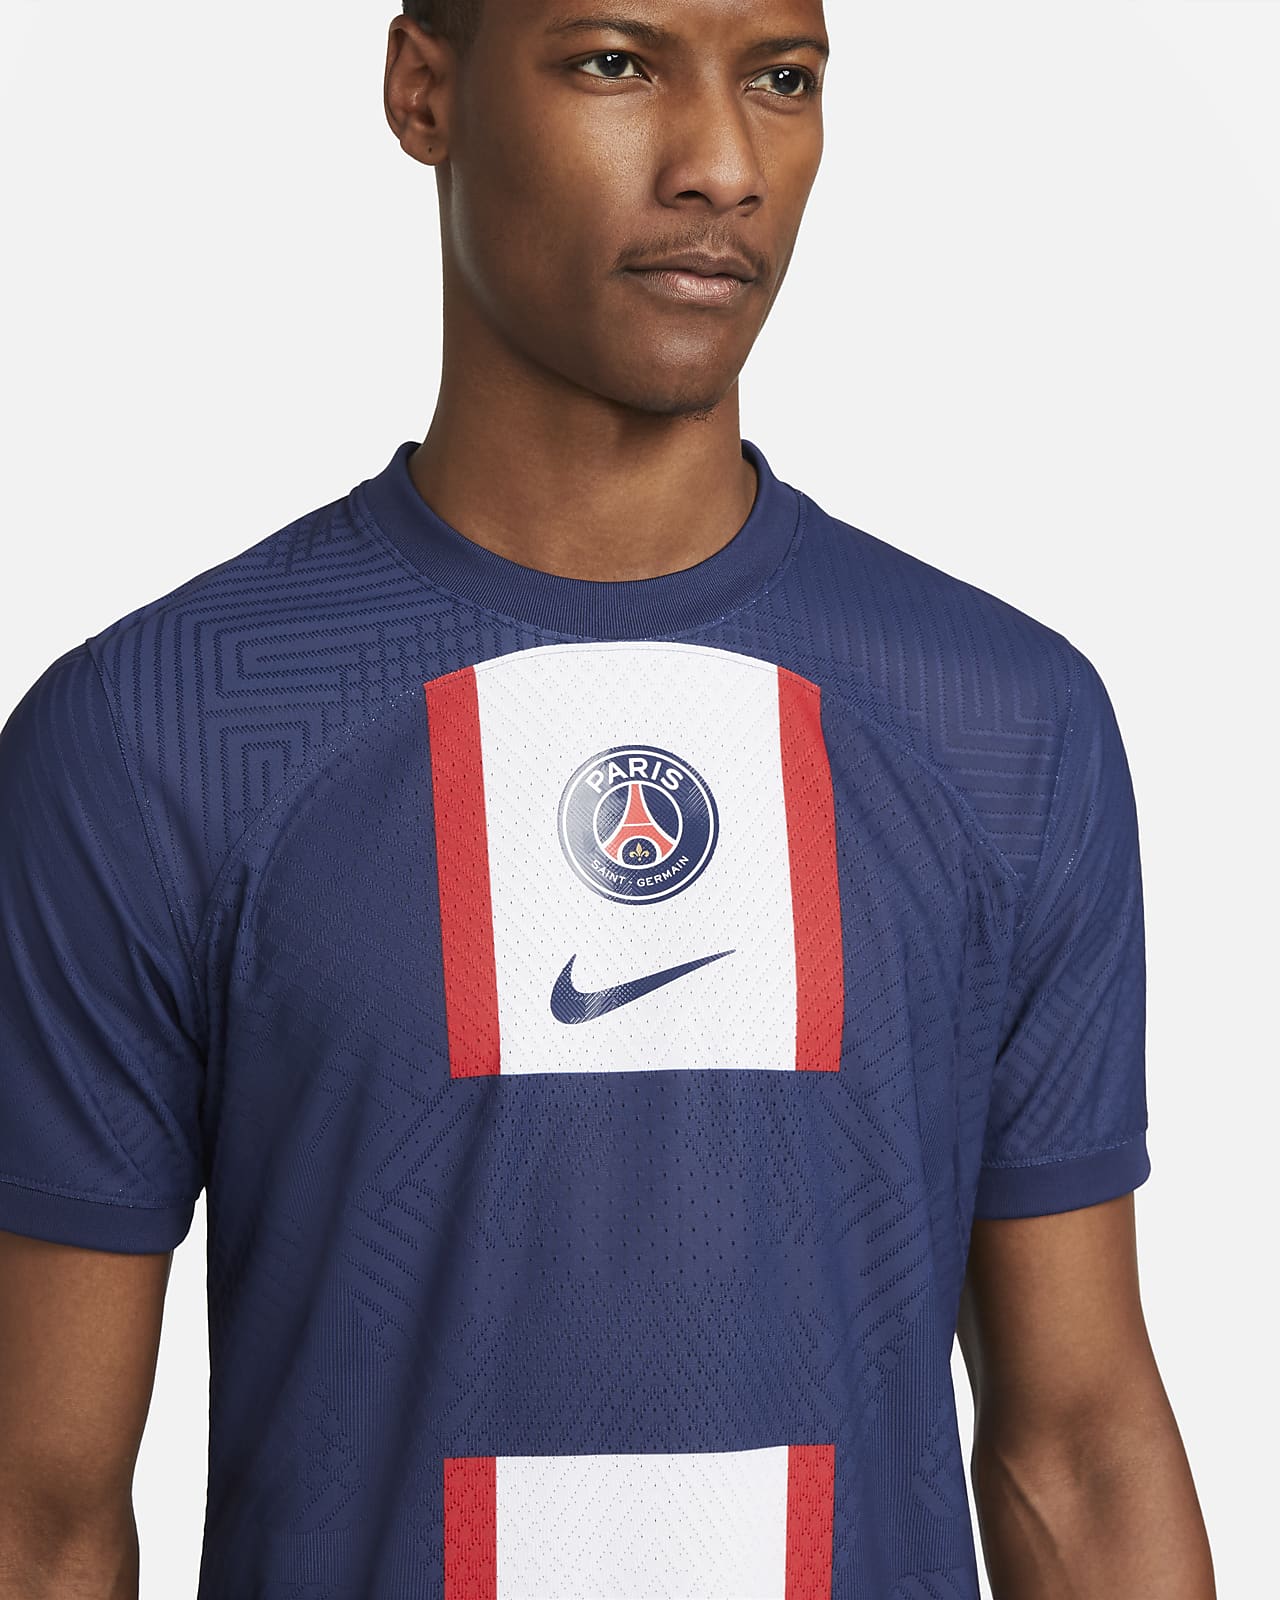 assistance Precipice to see Paris Saint-Germain 2022/23 Match Home Men's Nike Dri-FIT ADV Soccer Jersey.  Nike.com